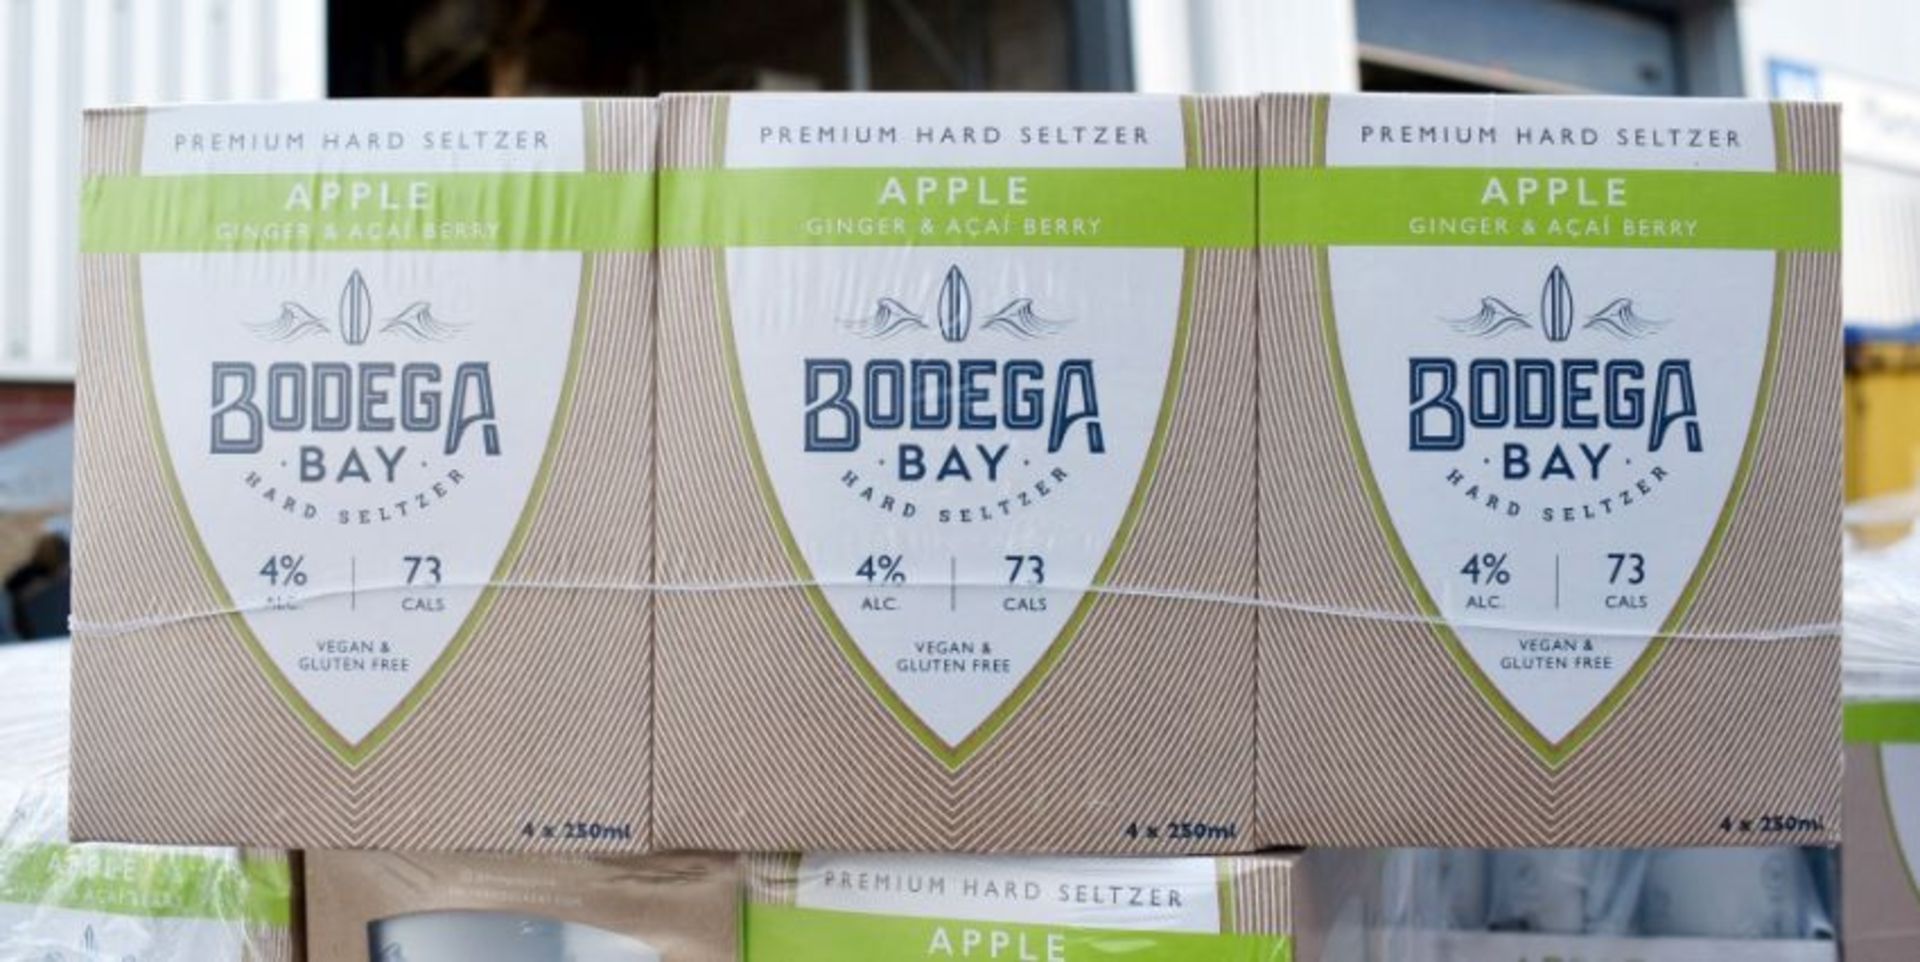 24 x Bodega Bay Hard Seltzer 250ml Alcoholic Sparkling Water Drinks - Apple Ginger & Acai Berry - 4% - Image 2 of 7